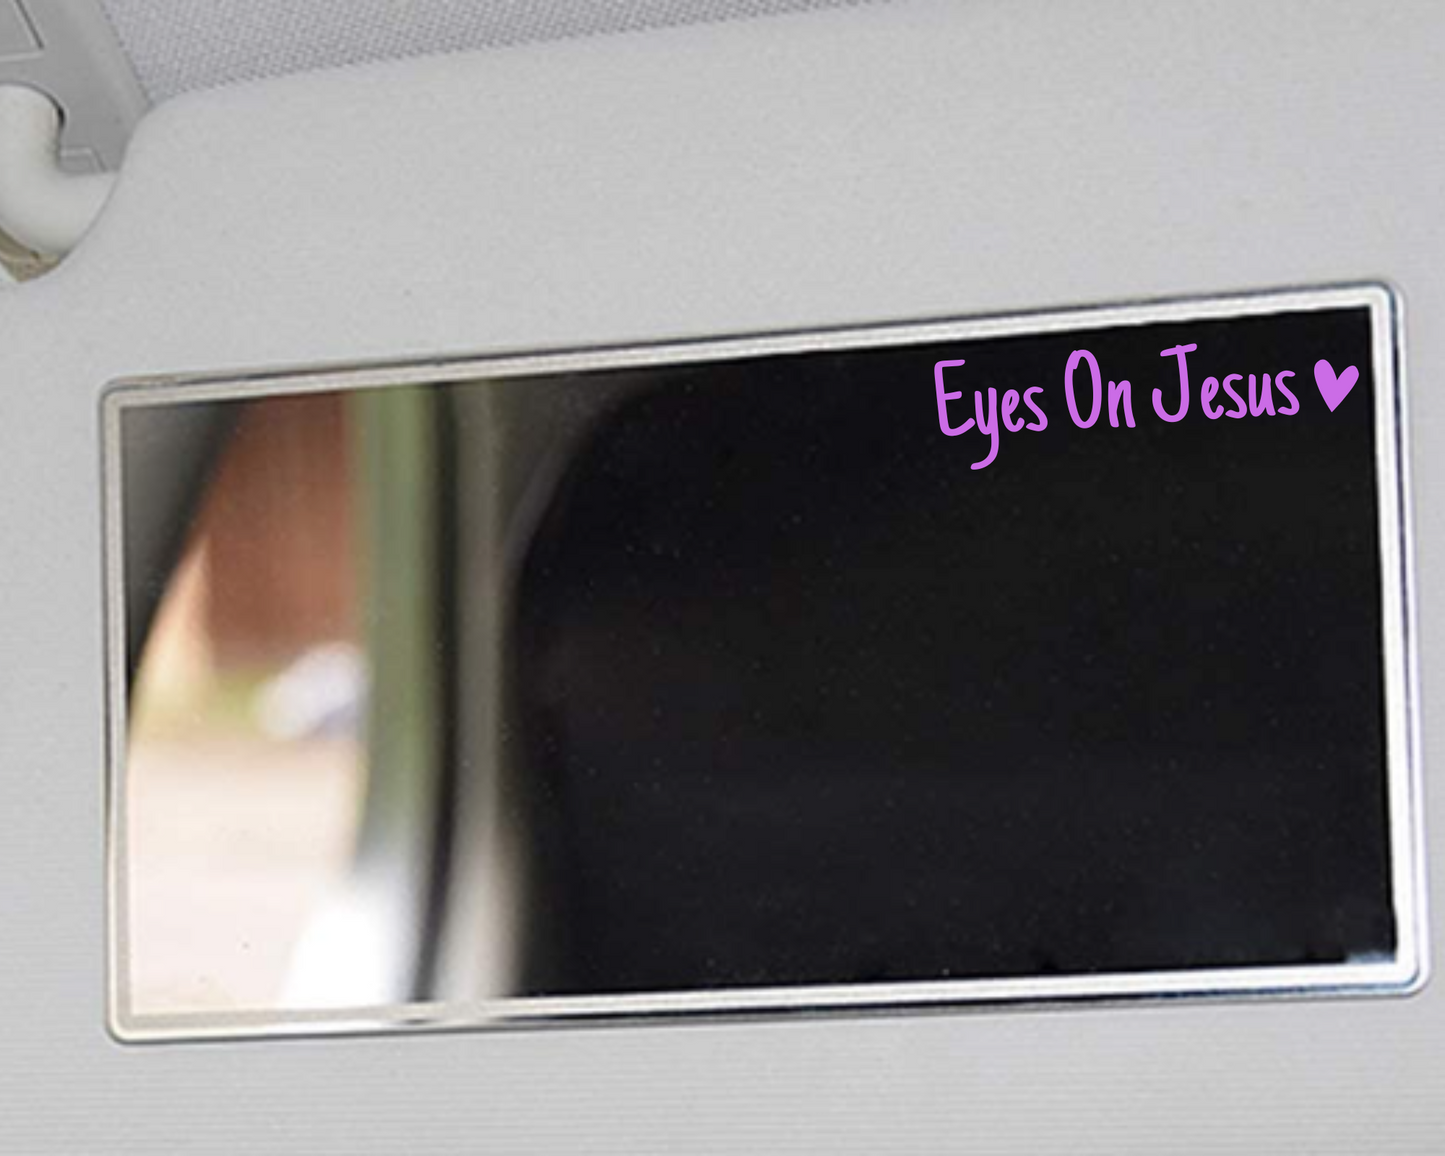 Eyes On Jesus Car Mirror Decal